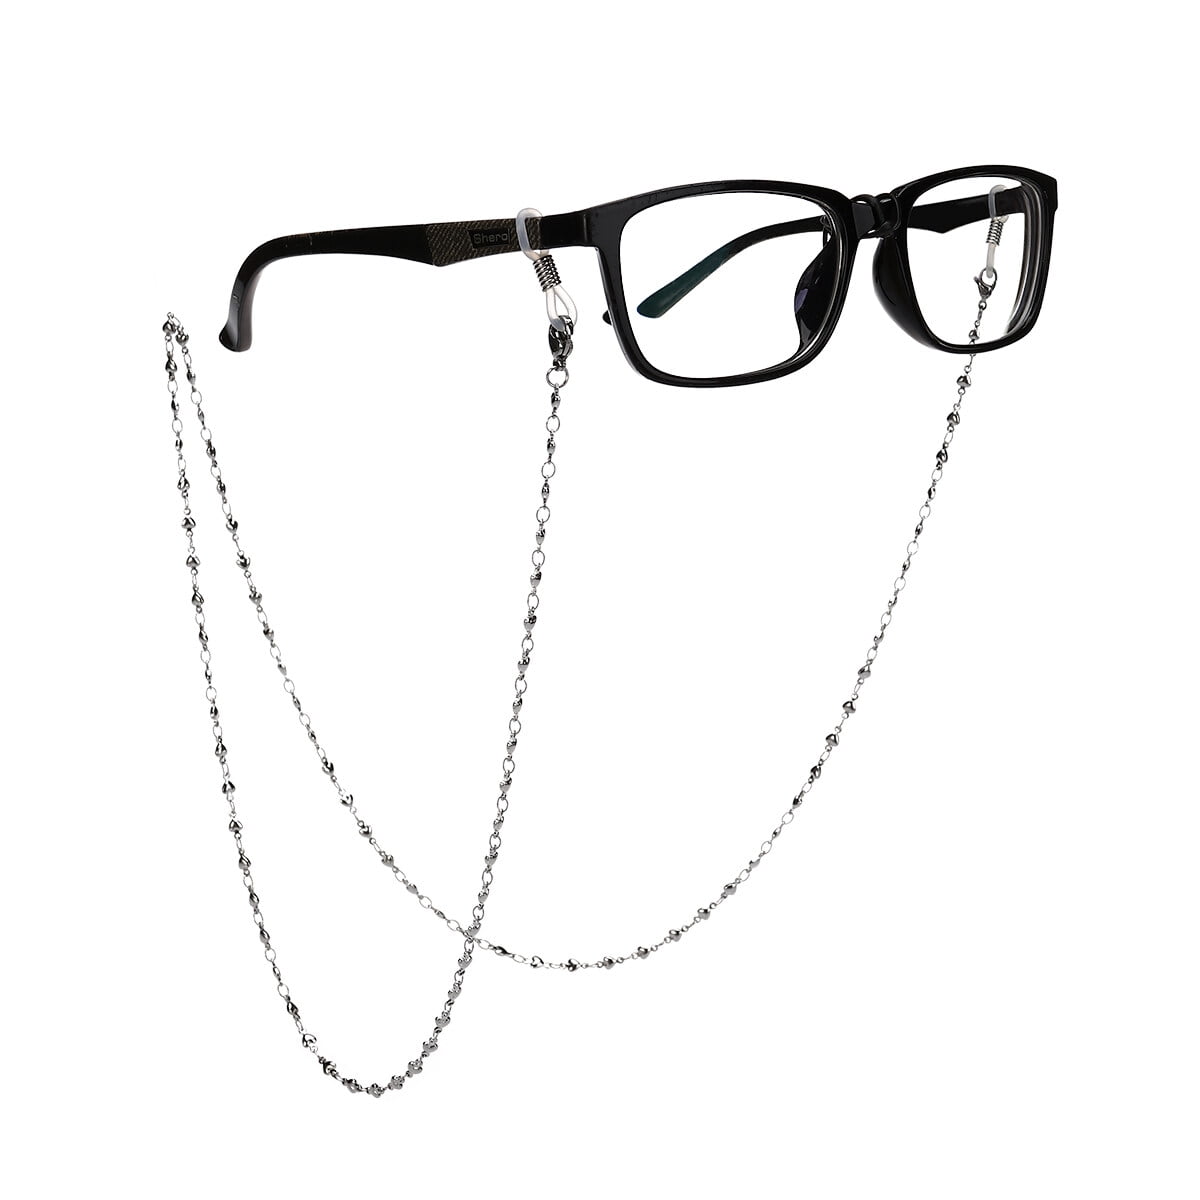 Homemaxs Imitation Pearls Bead Eyeglass Chain Glasses Strap India | Ubuy